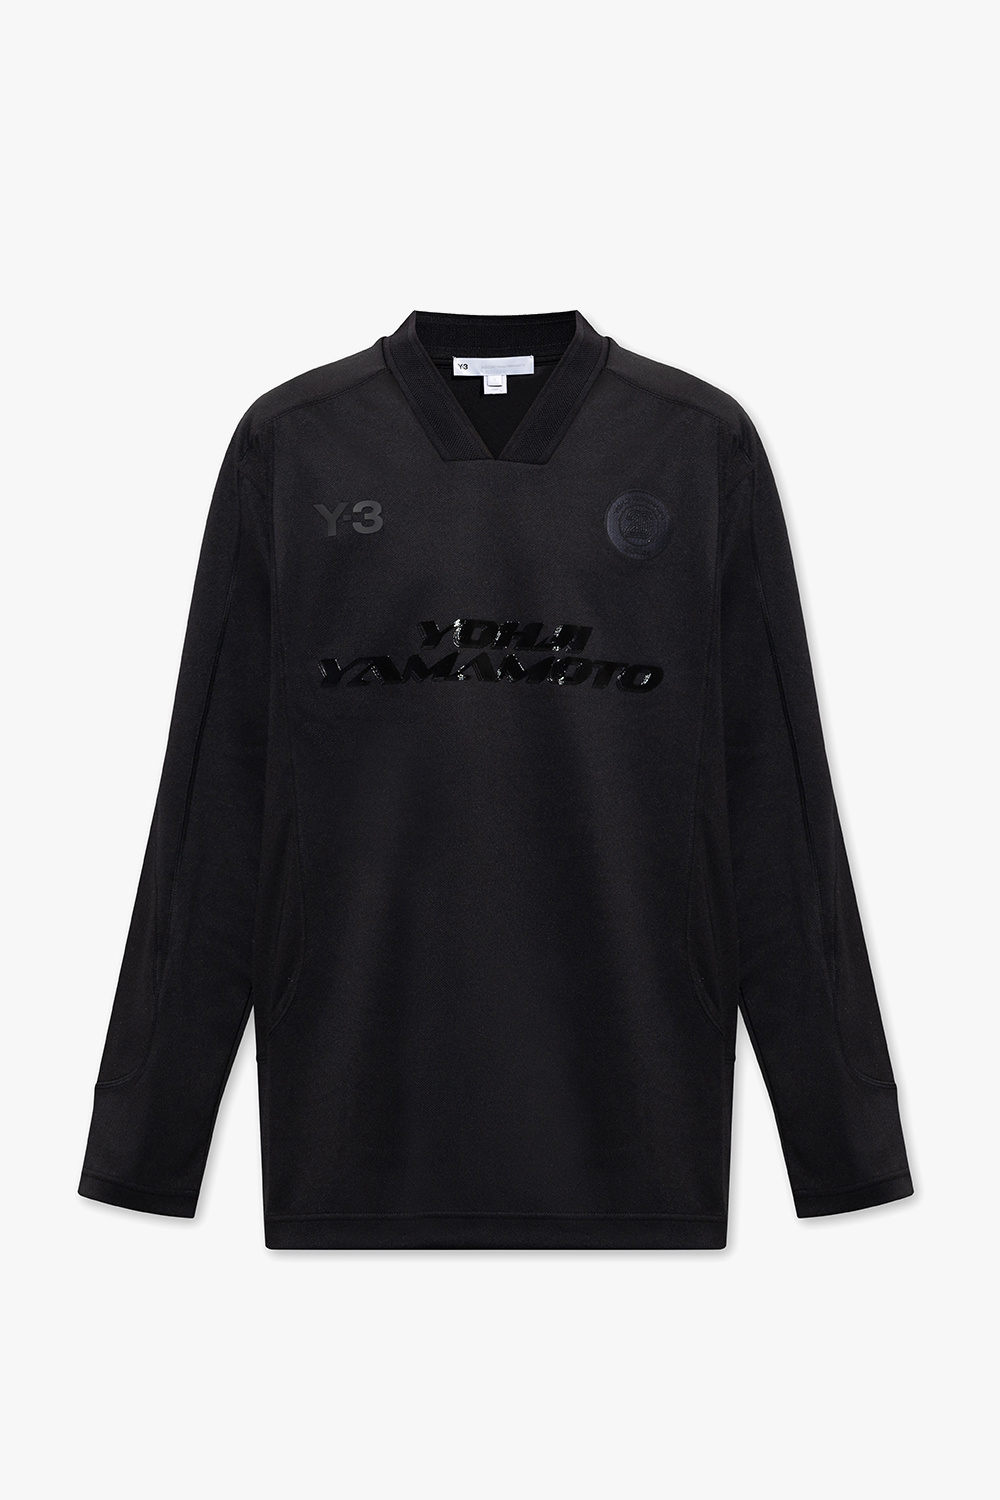 Y-3 Yohji Yamamoto T-shirt with long sleeves | Men's Clothing | Vitkac